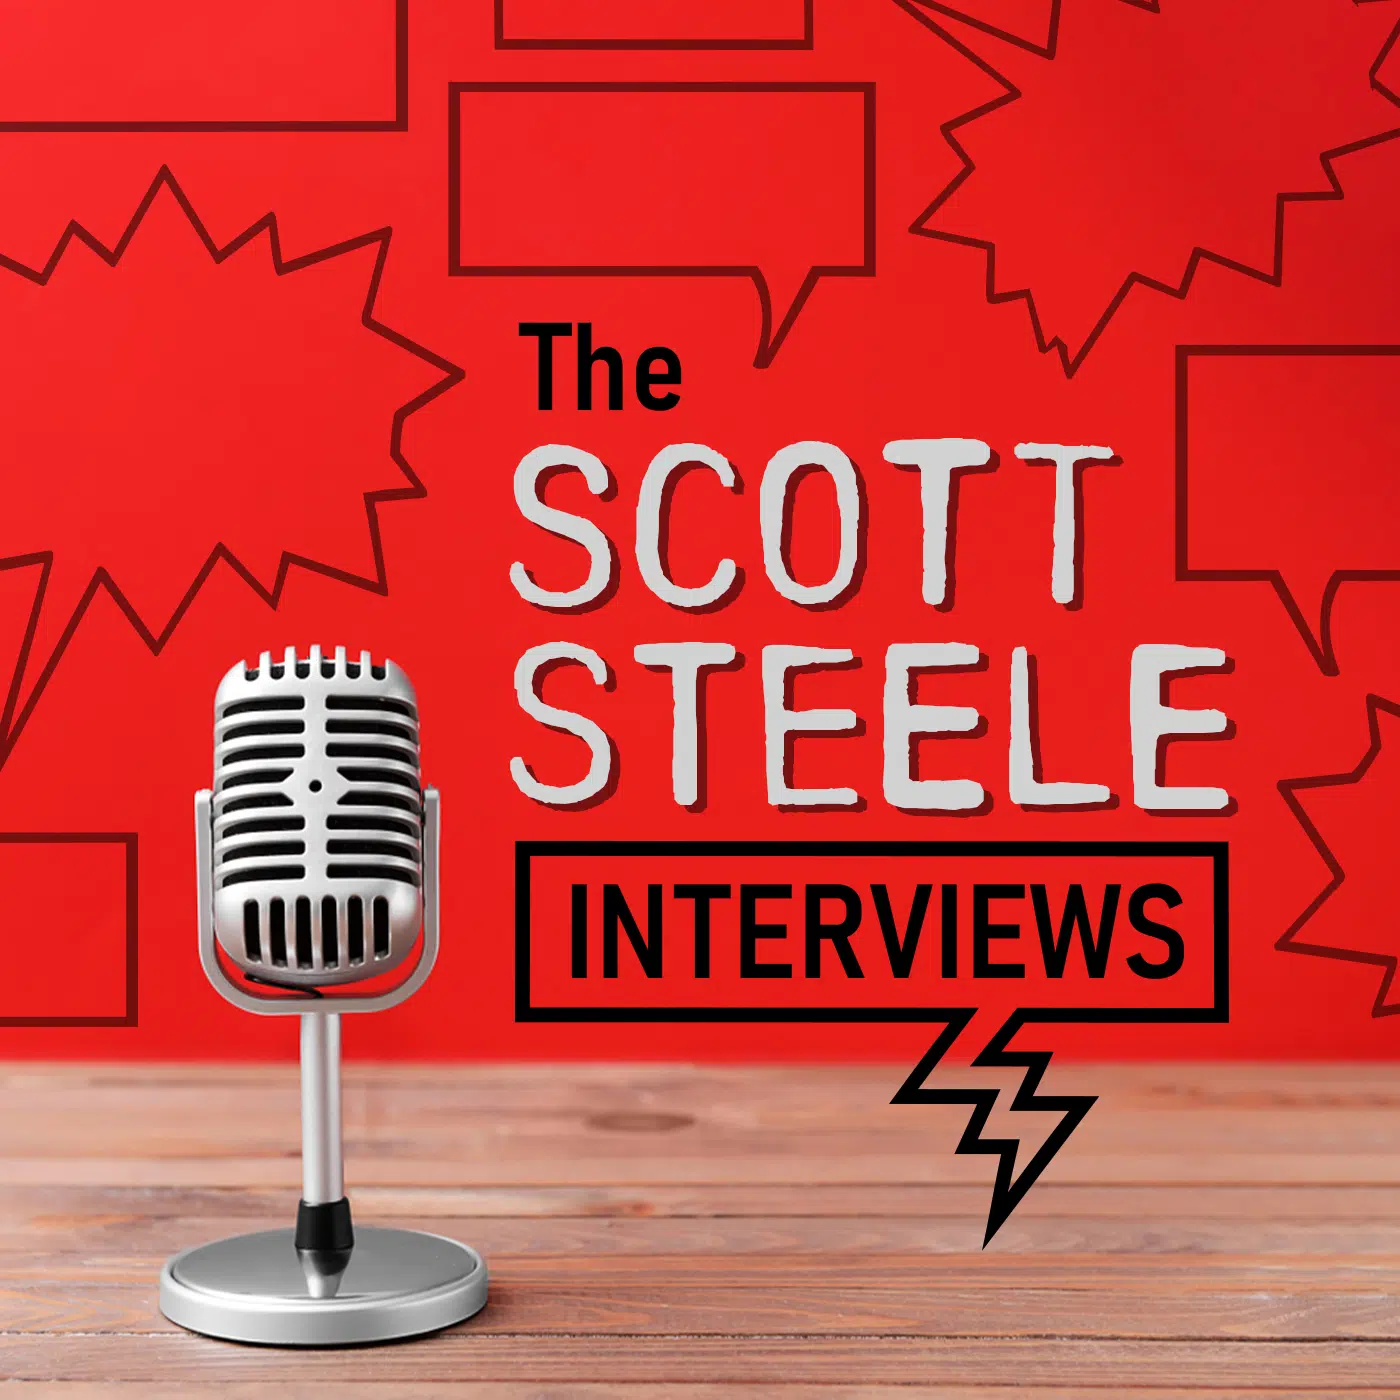 The Scott Steele Interviews